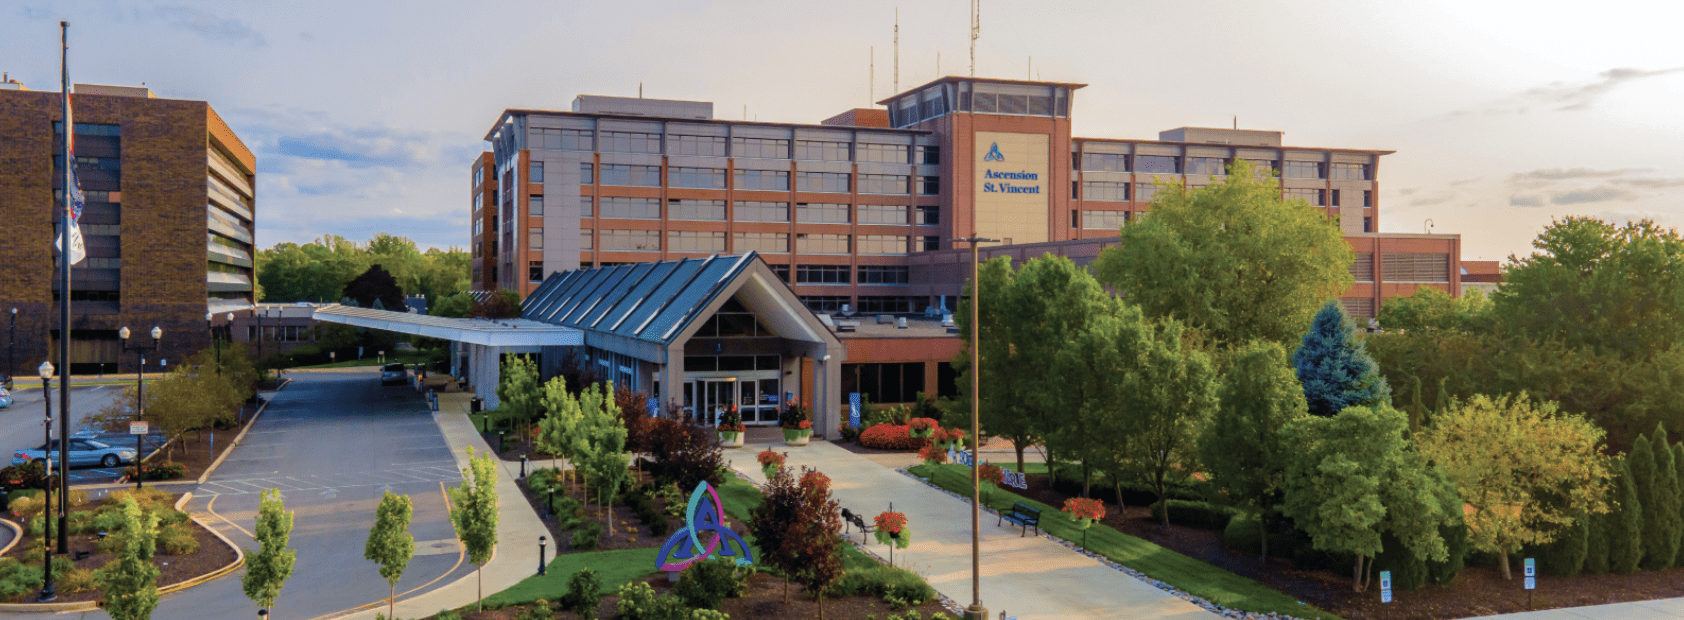 Ascension-St-Vincent-Hospital-Indianapolis